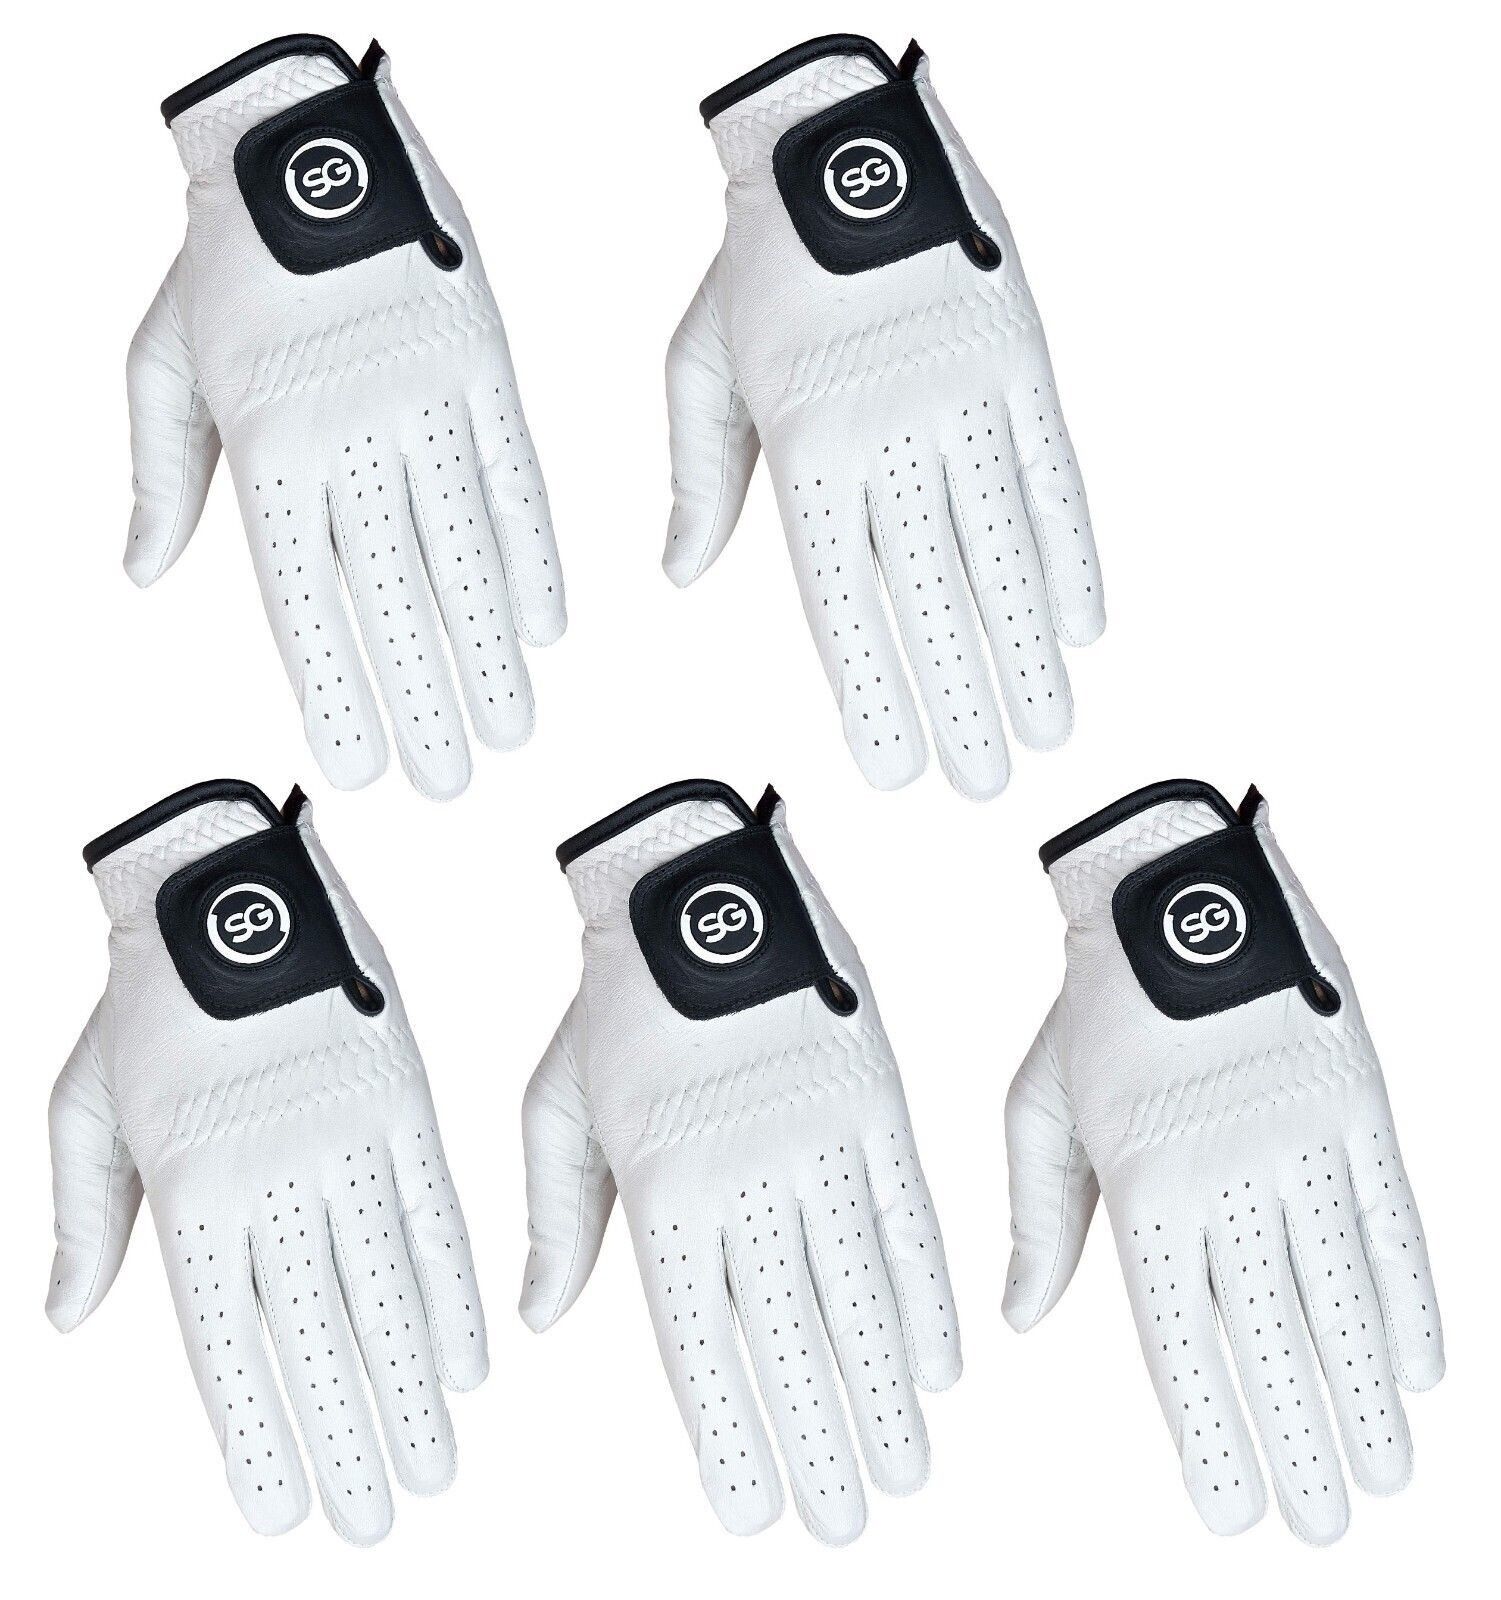 SG Pack of 5 Men White Golf Gloves Cadet and Regular sizes 100% Cabretta Leather